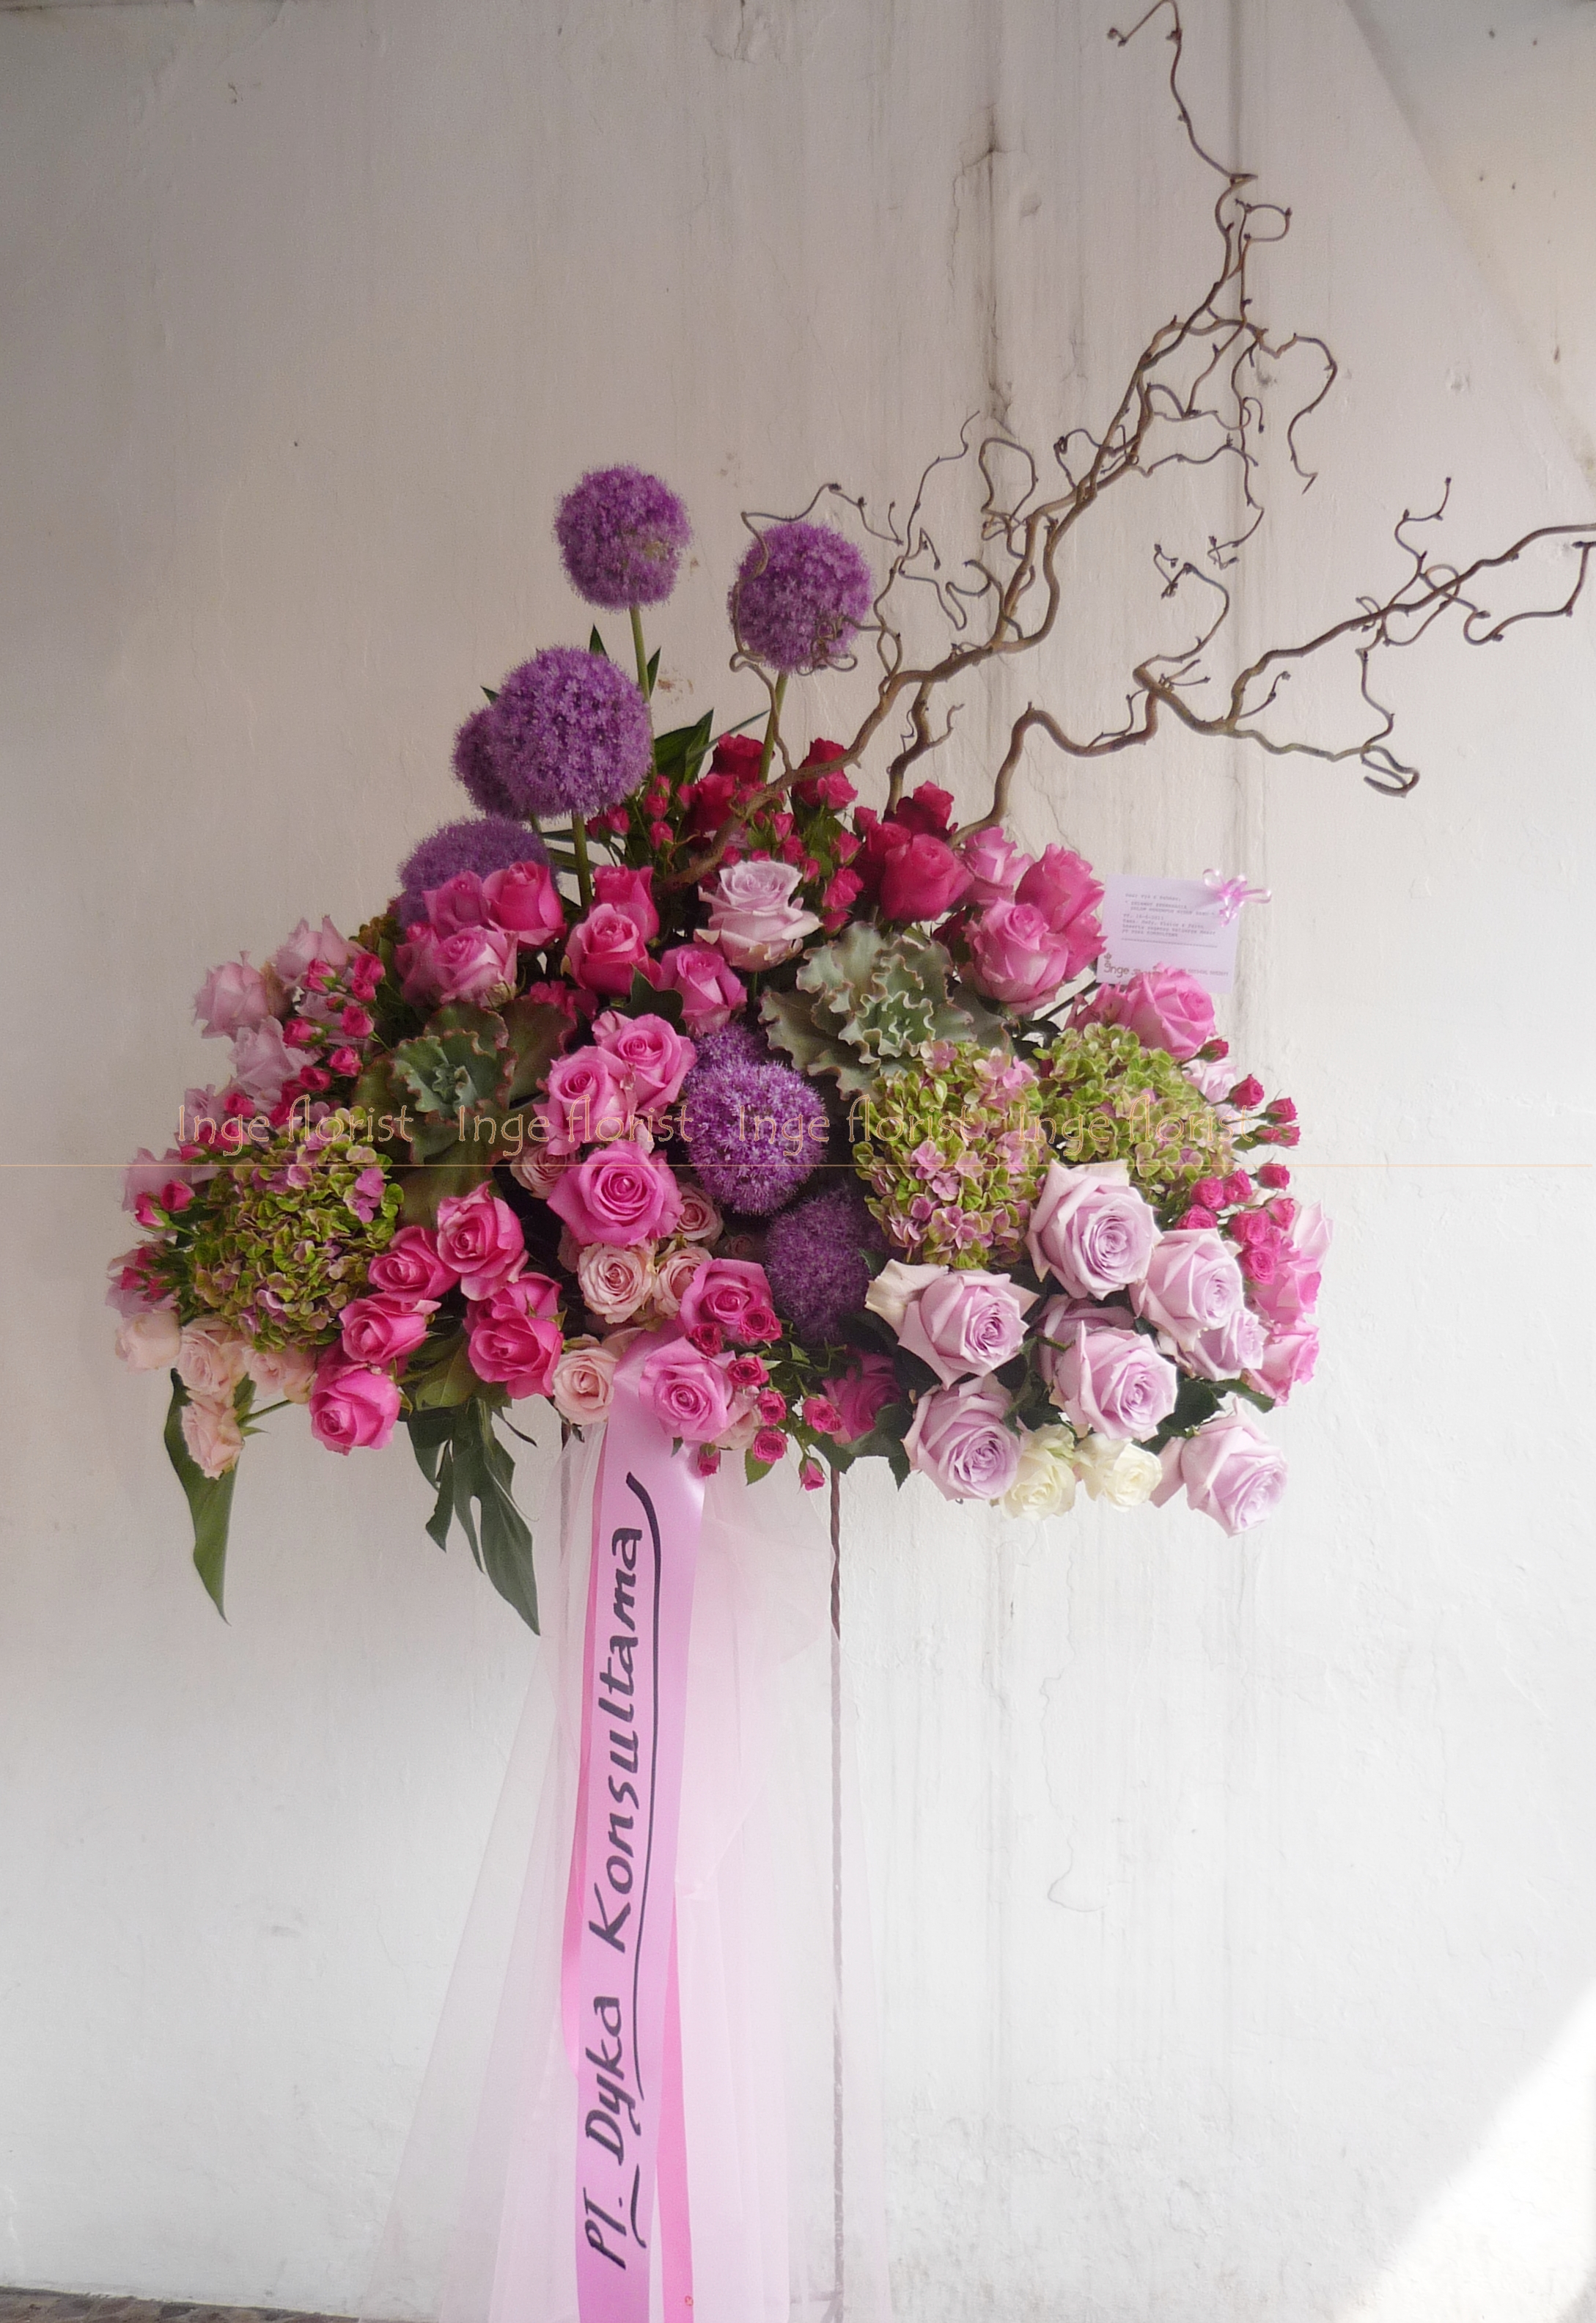 Standing Flower – Congratulation  Inge Florist - Wedding 